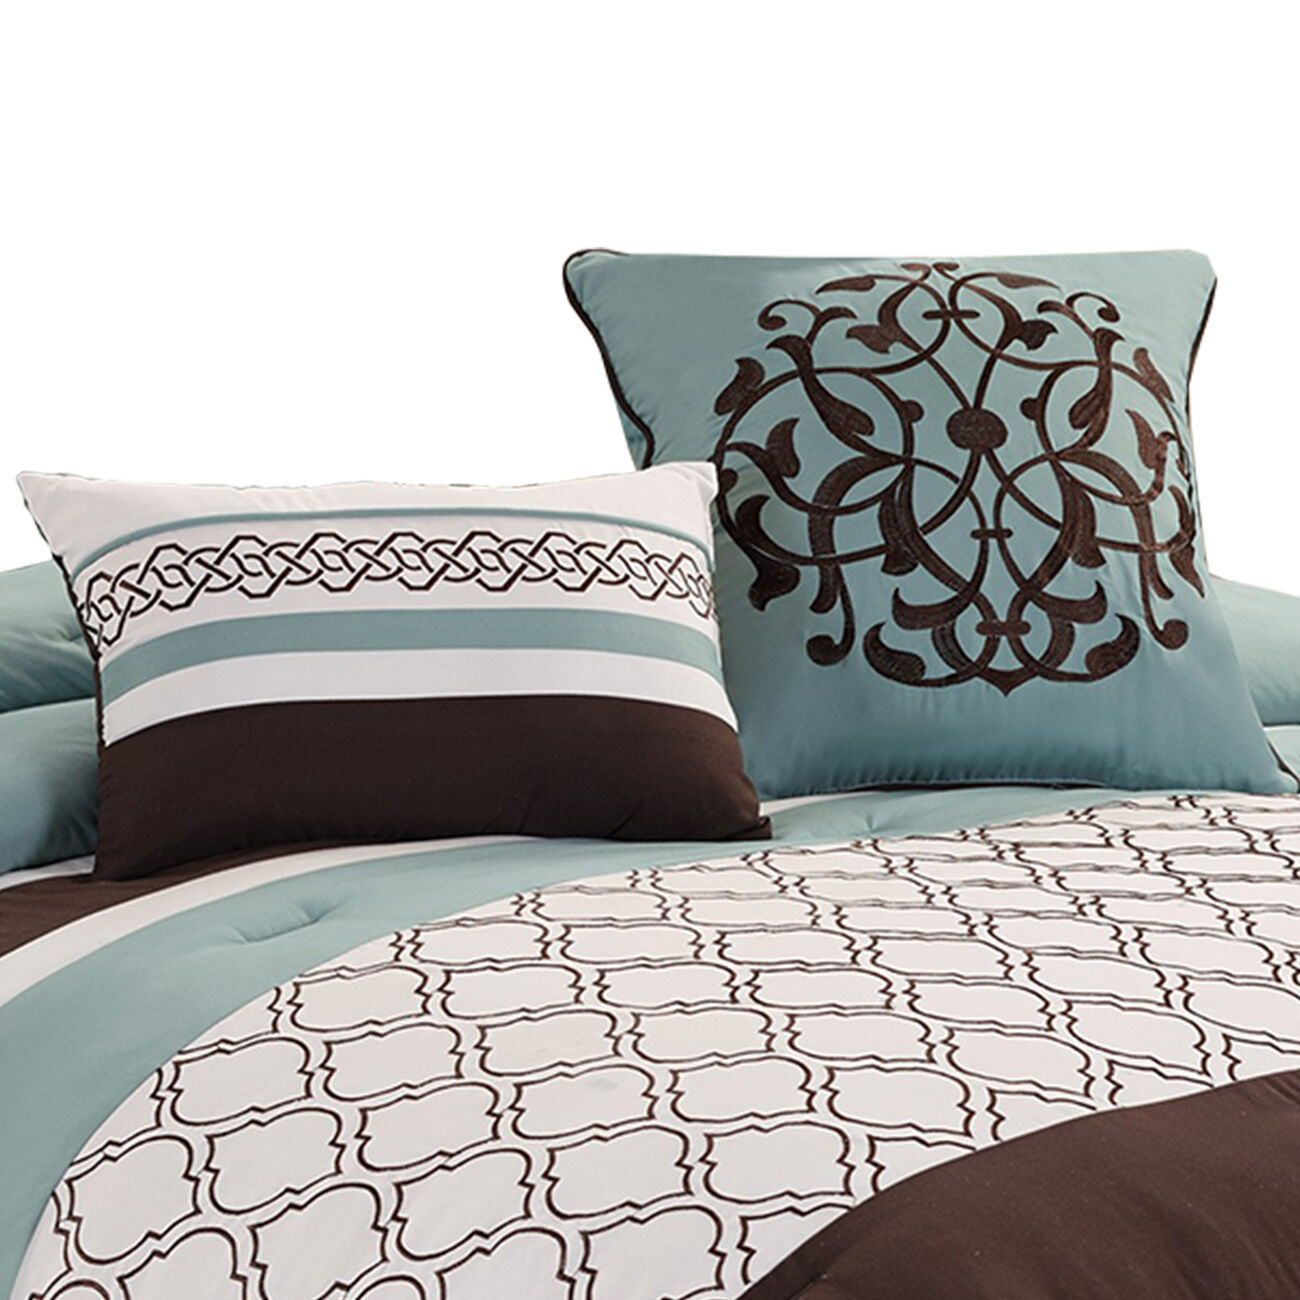 Quatrefoil Queen Size 8 Piece Fabric Comforter Set , Brown and Blue